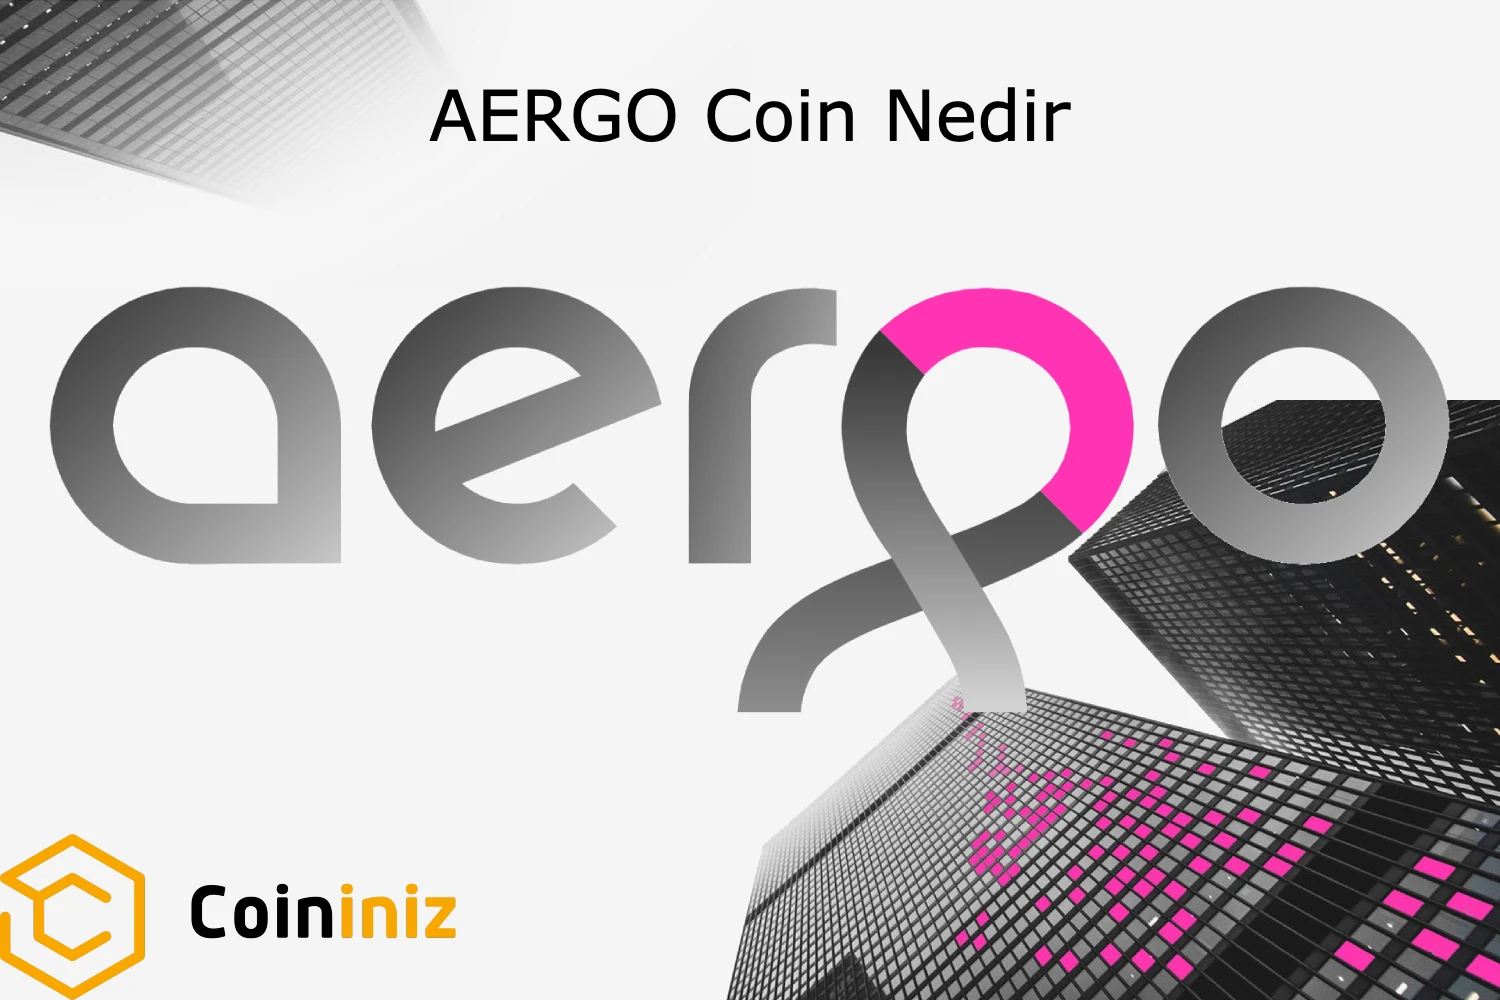 AERGO Coin Nedir